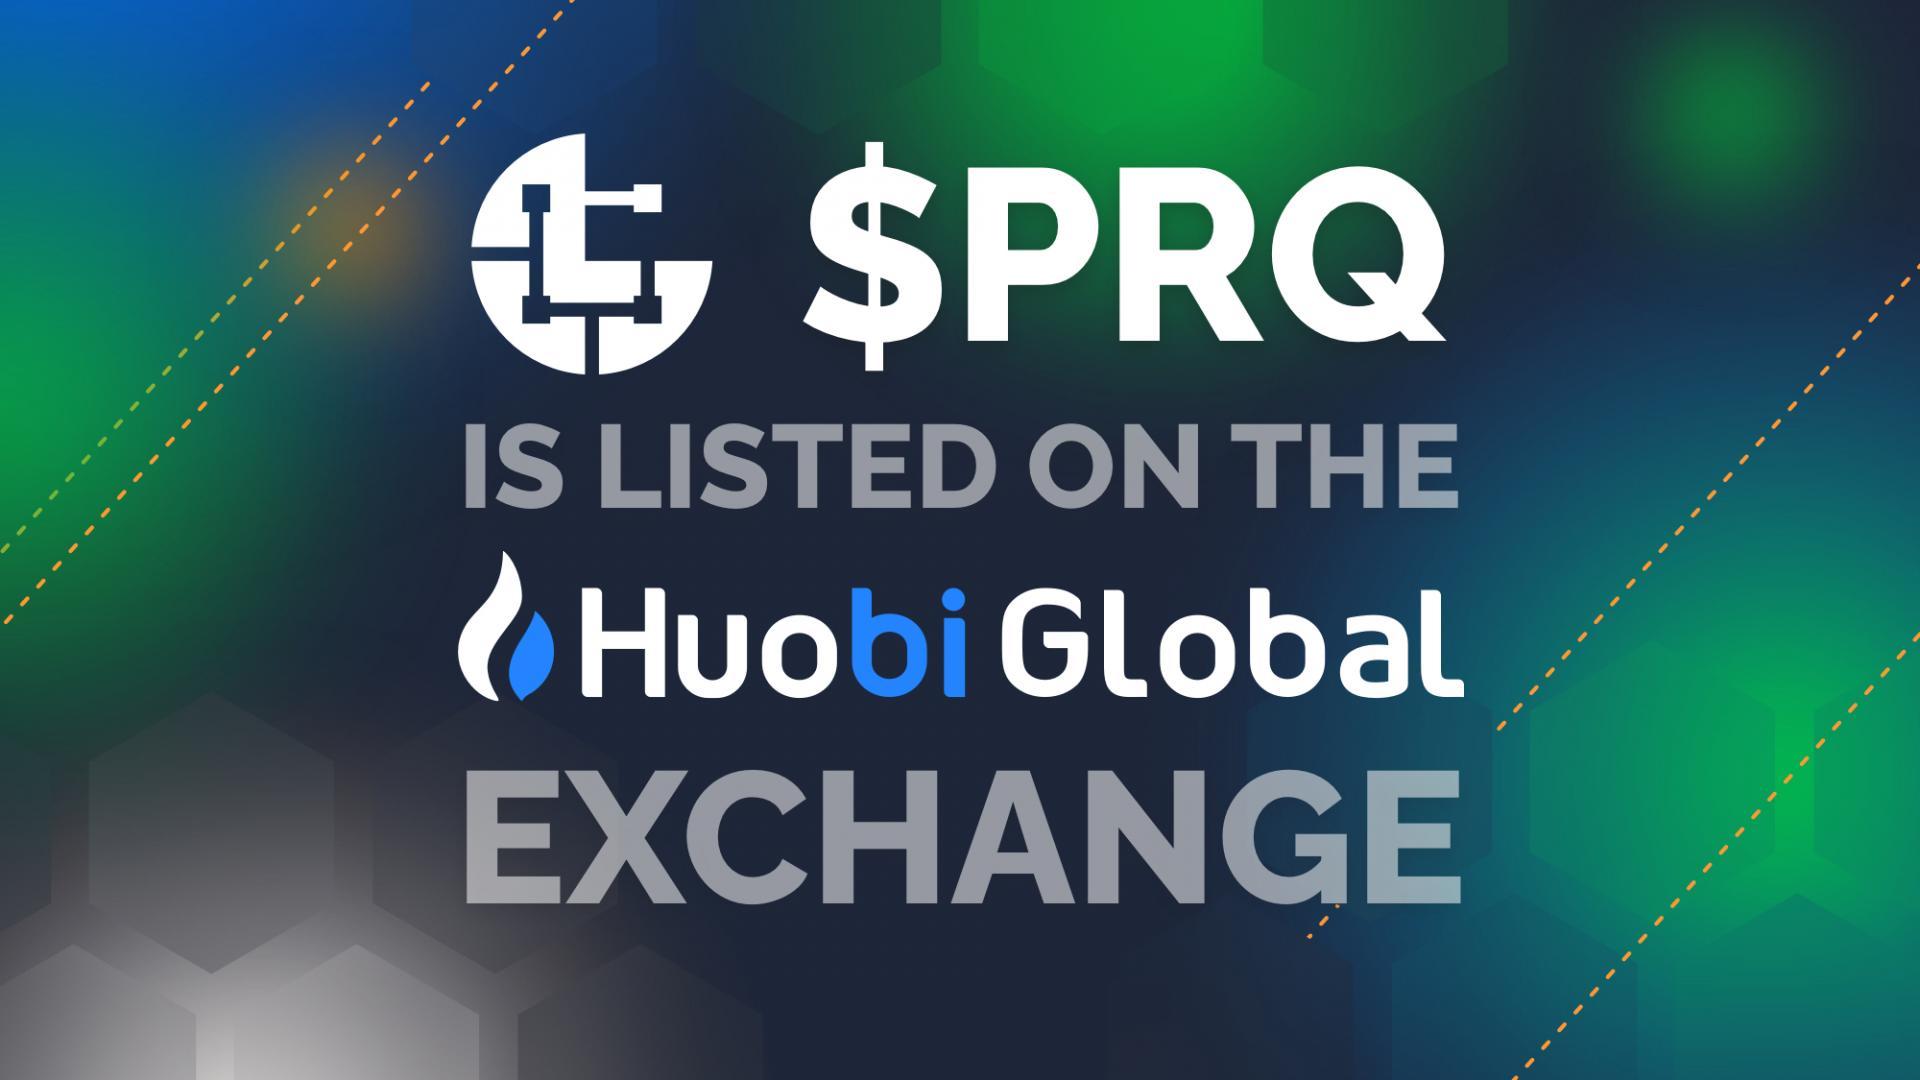 PARSIQ ($PRQ) Lands on the Huobi Global Exchange